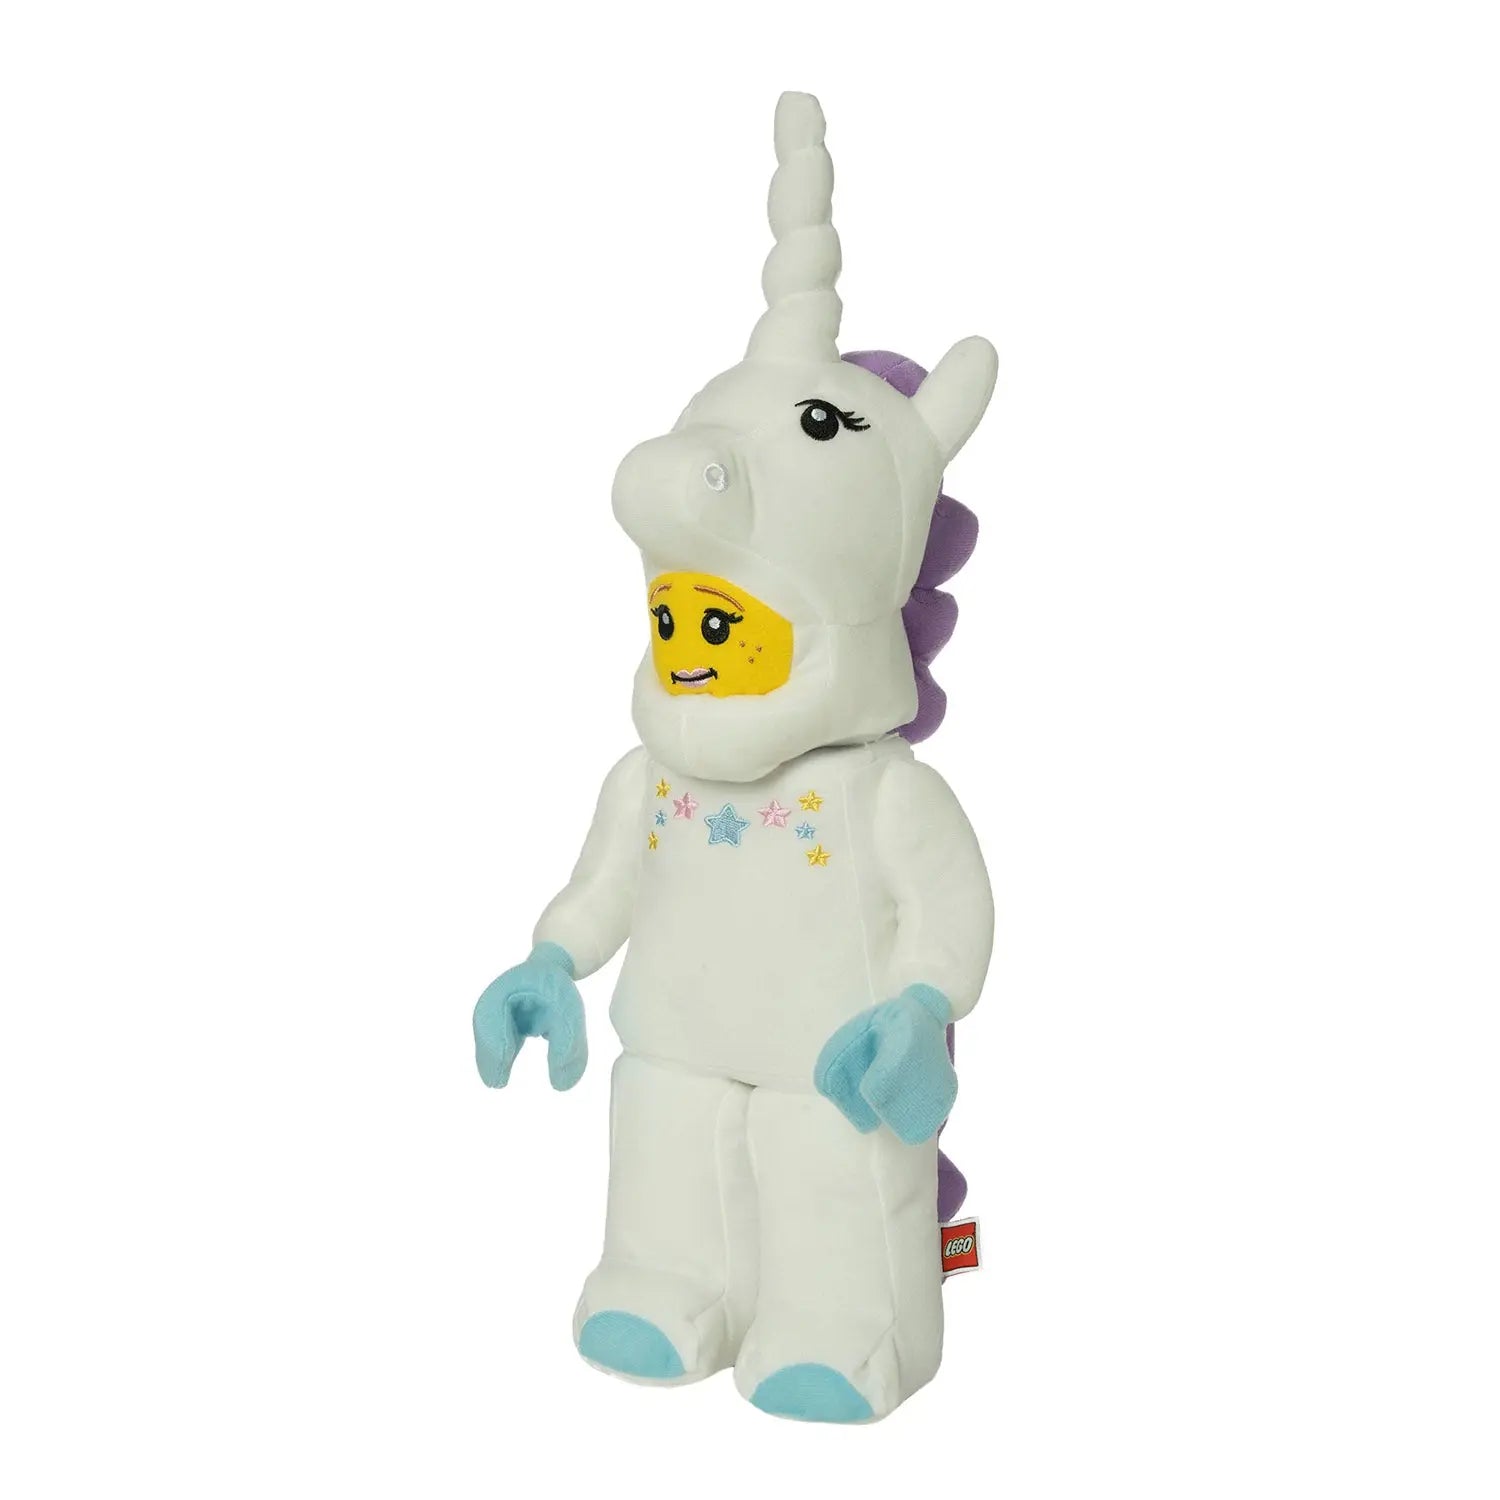 LEGO Unicorn Action Figures